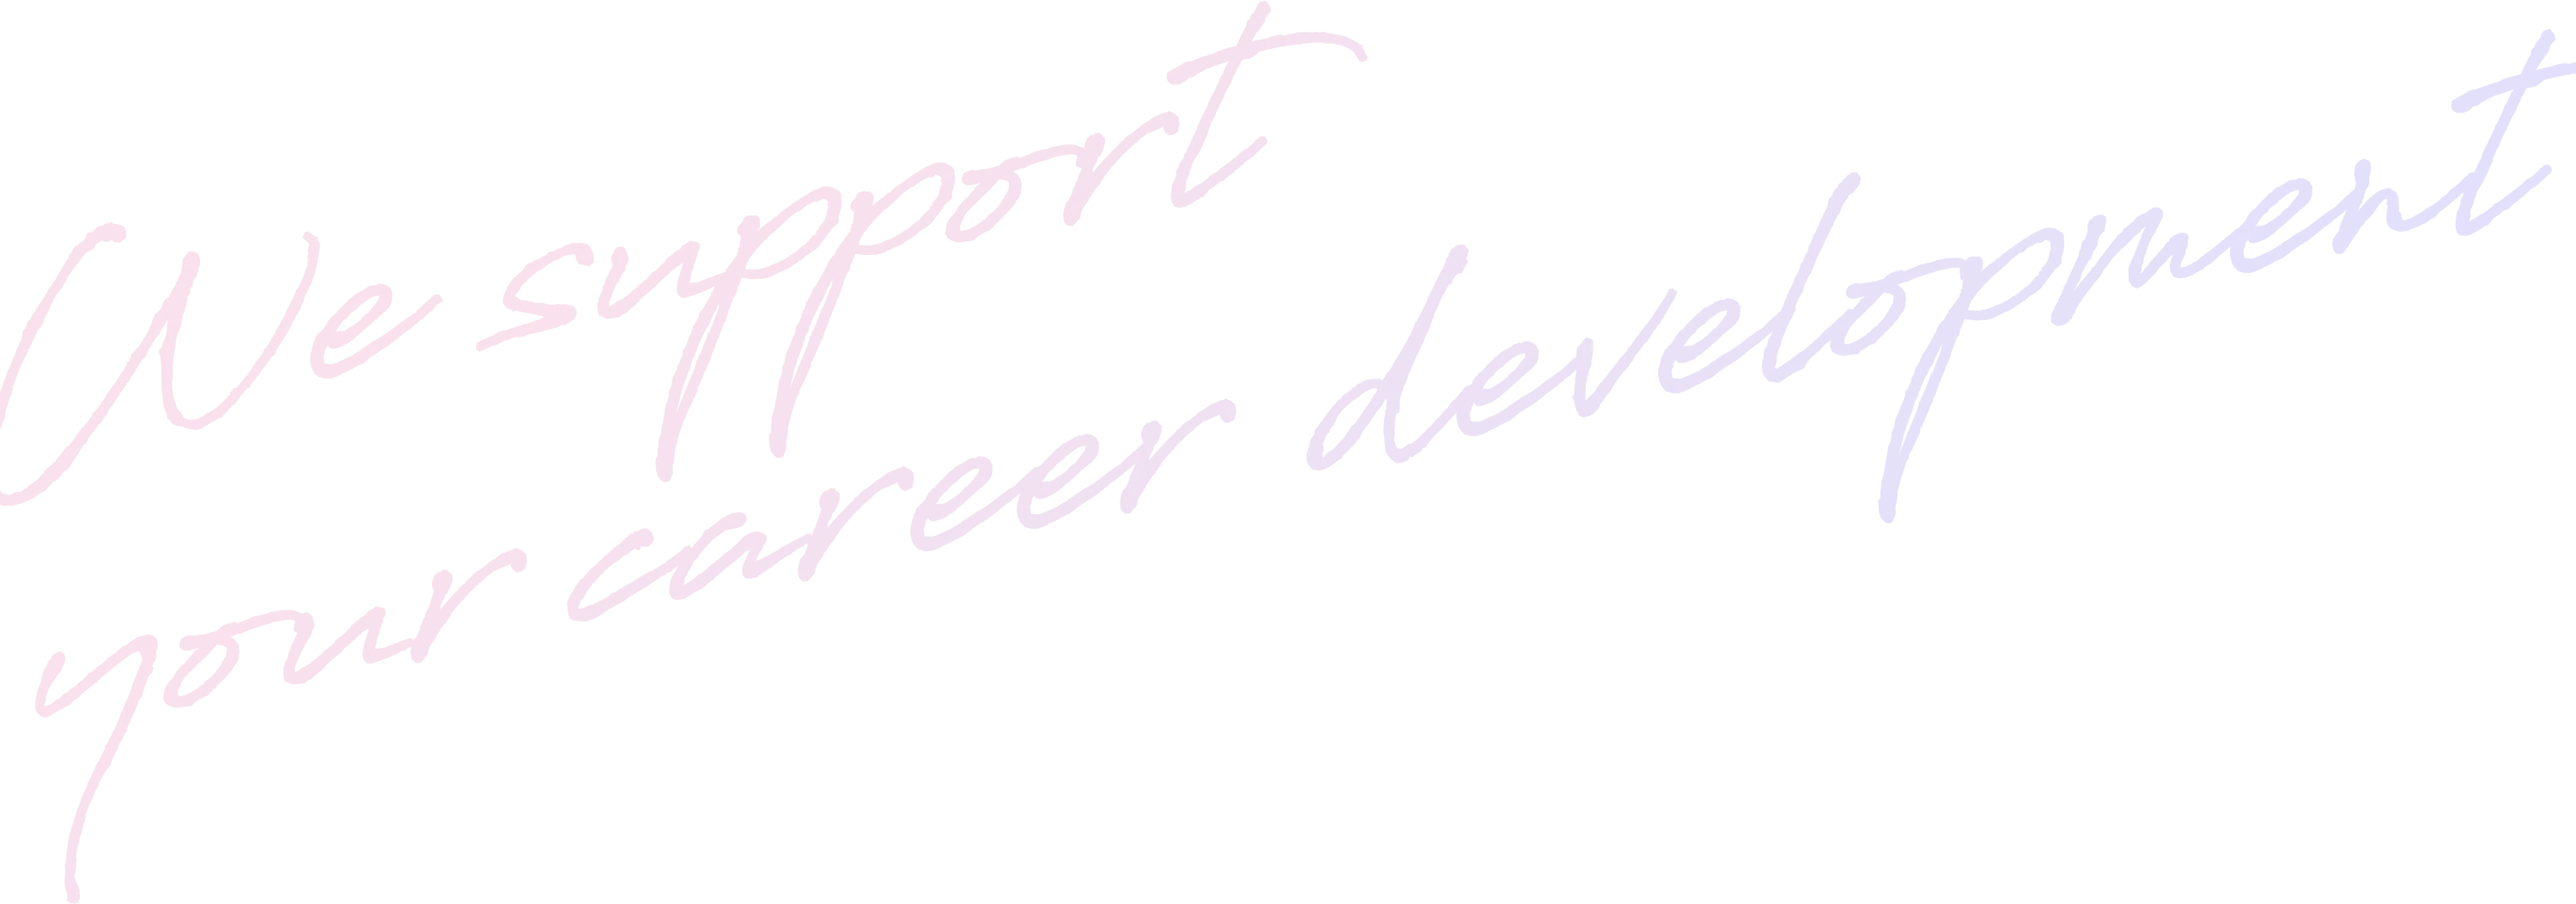 We support your career development